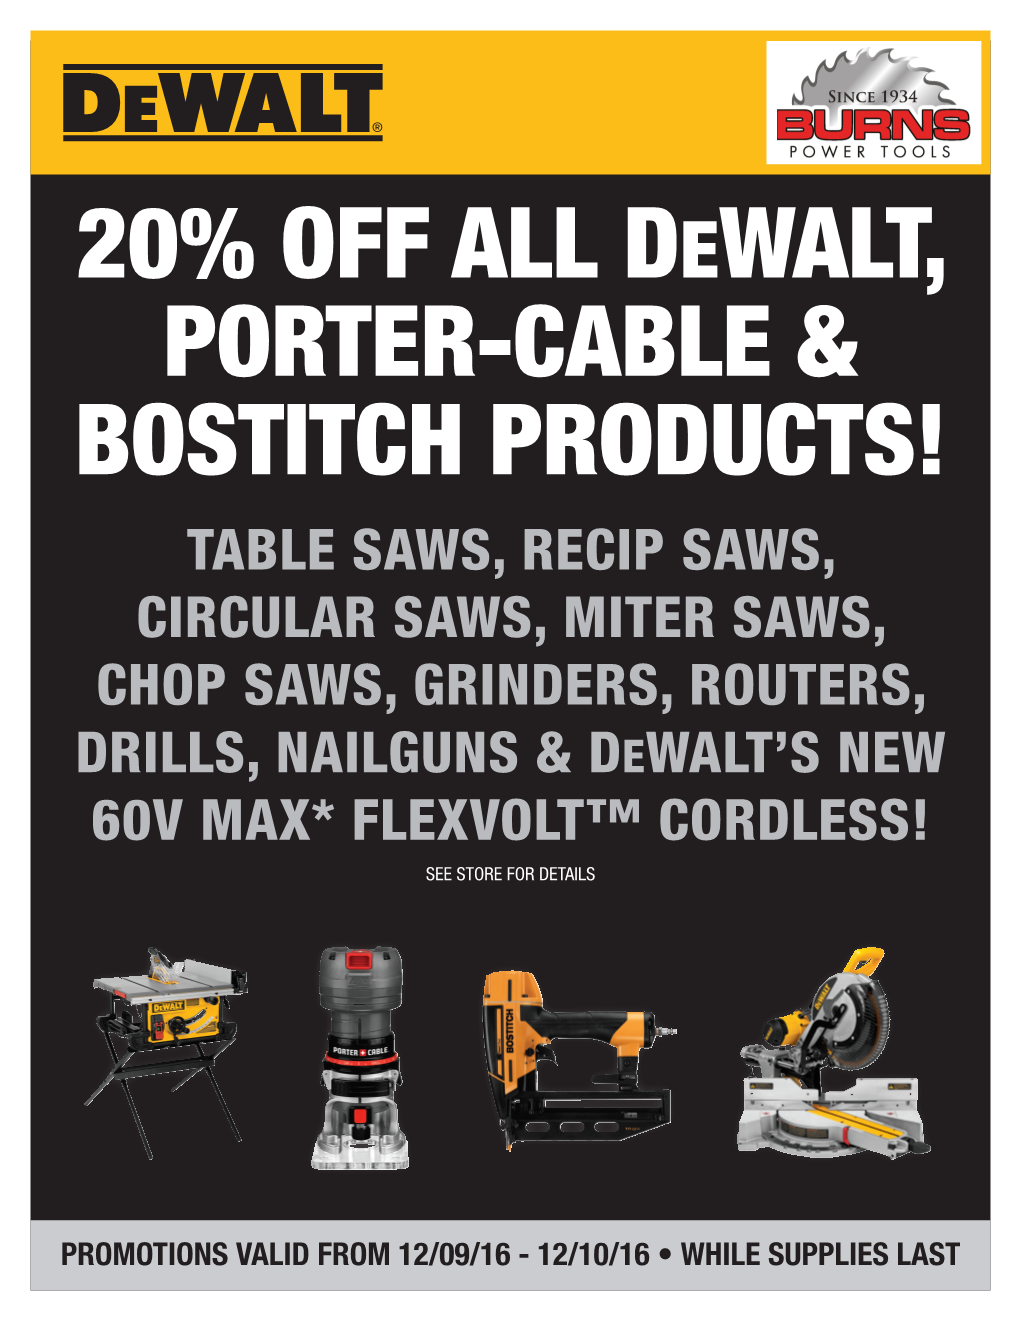 20% Off All Dewalt, Porter-Cable & Bostitch